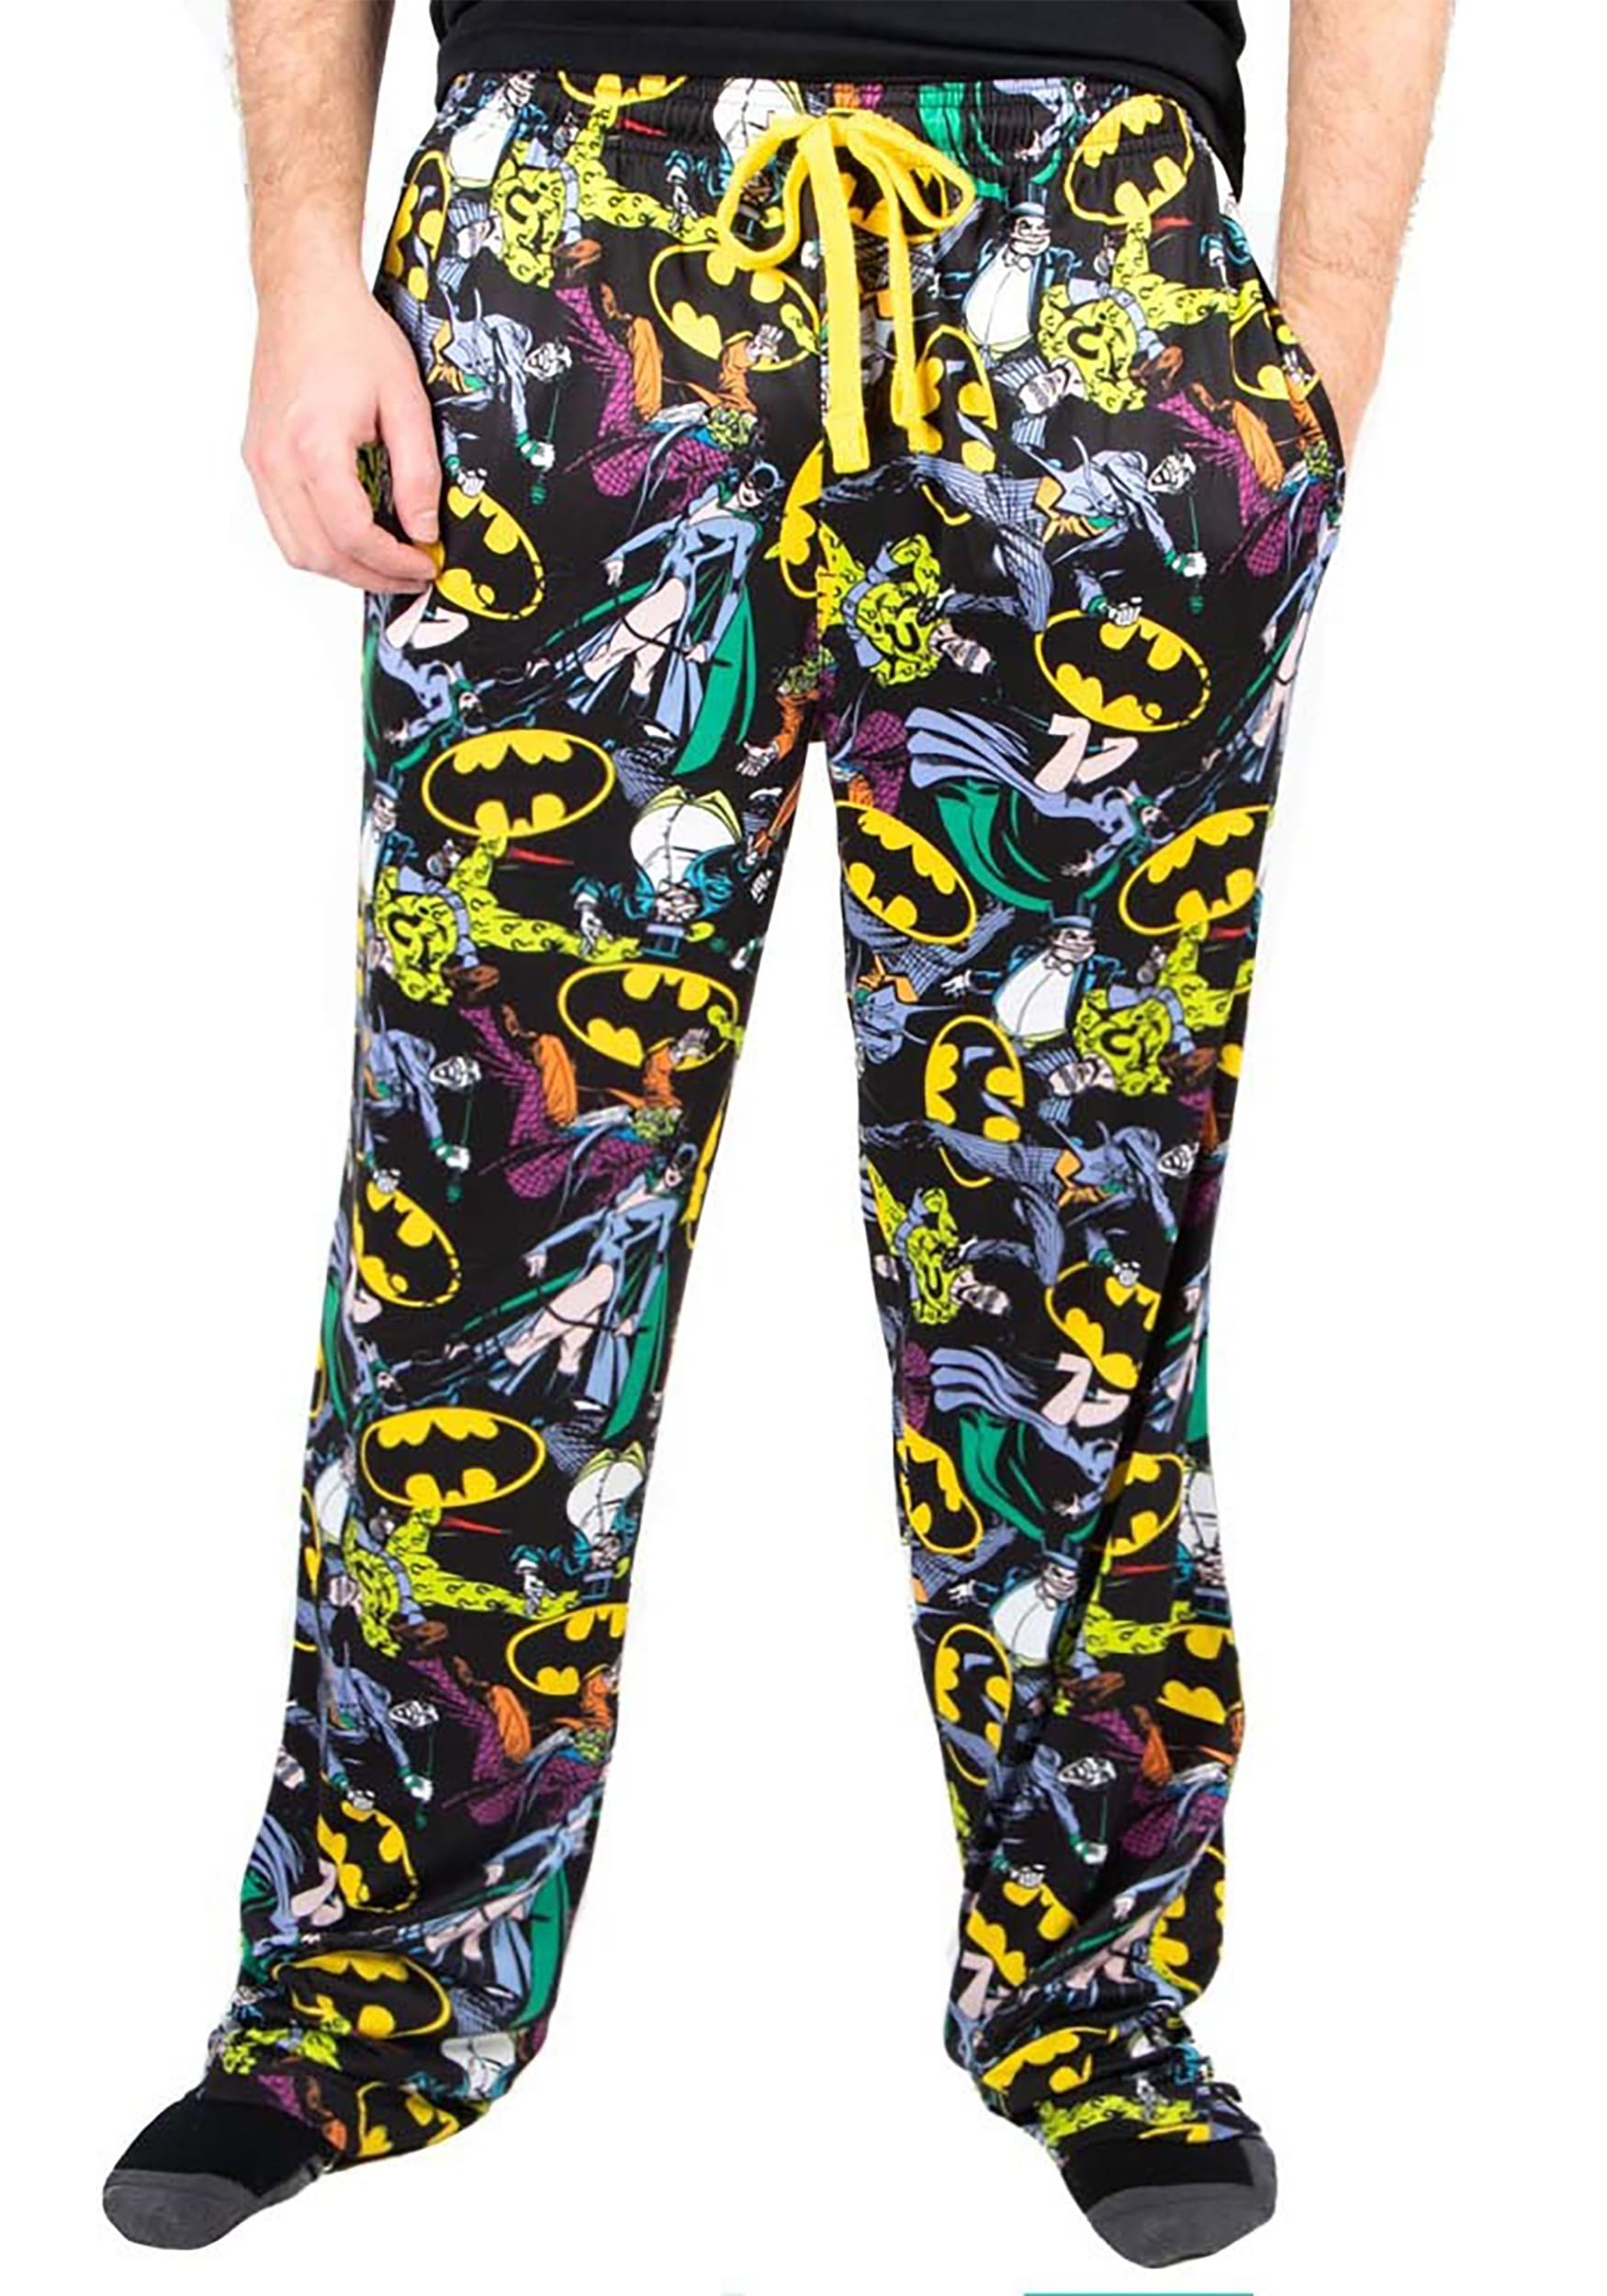 Batman Pants Bottoms for Boys Sizes 0-24 mos | Mercari